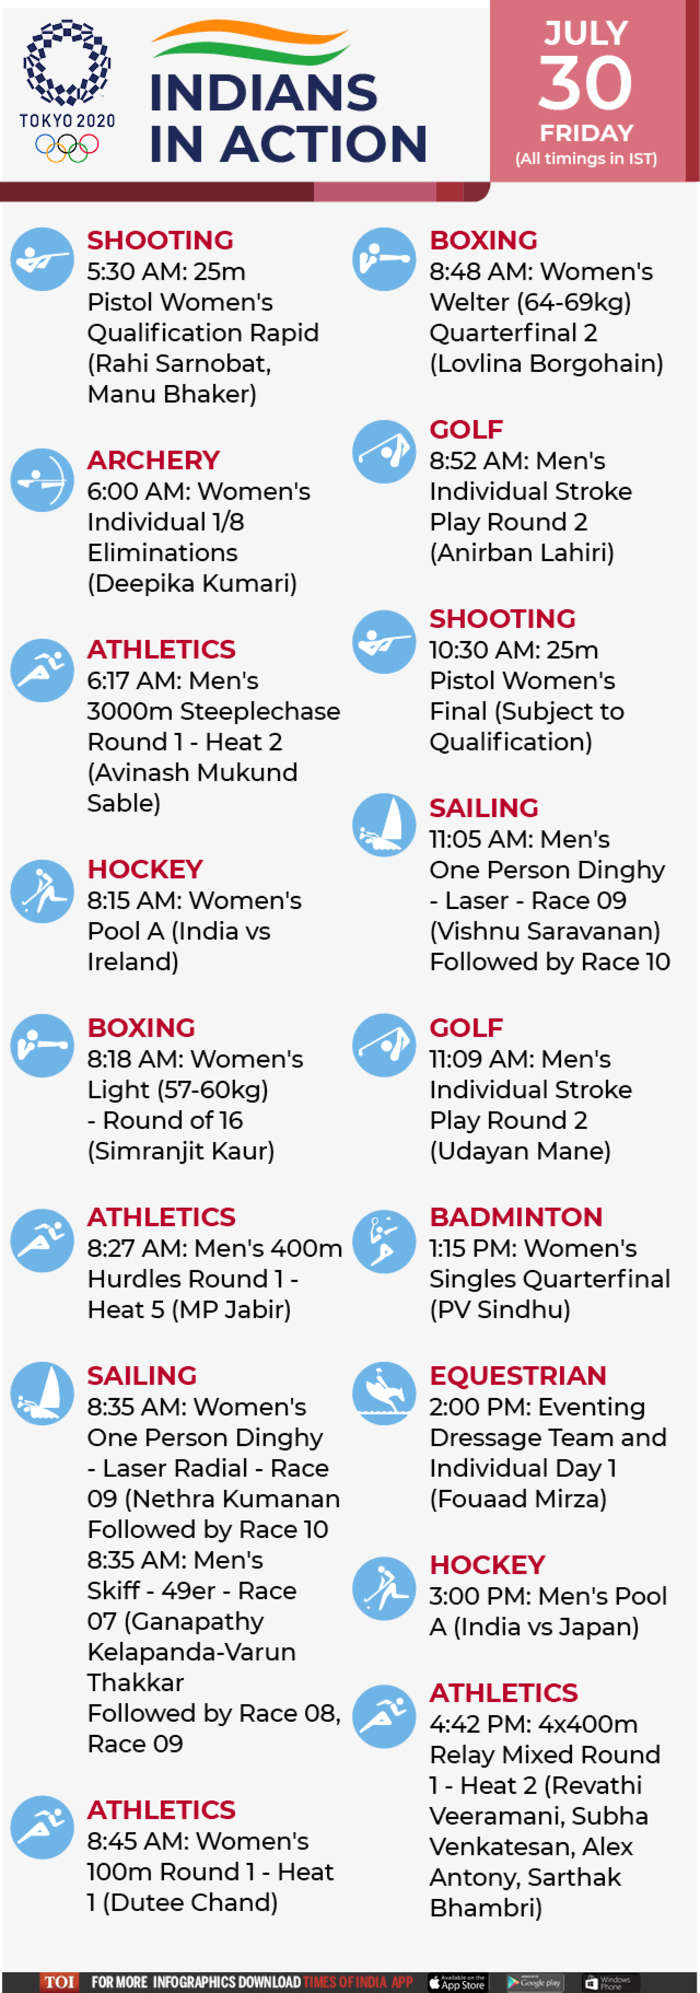 Badminton olympic games tokyo 2020 schedule